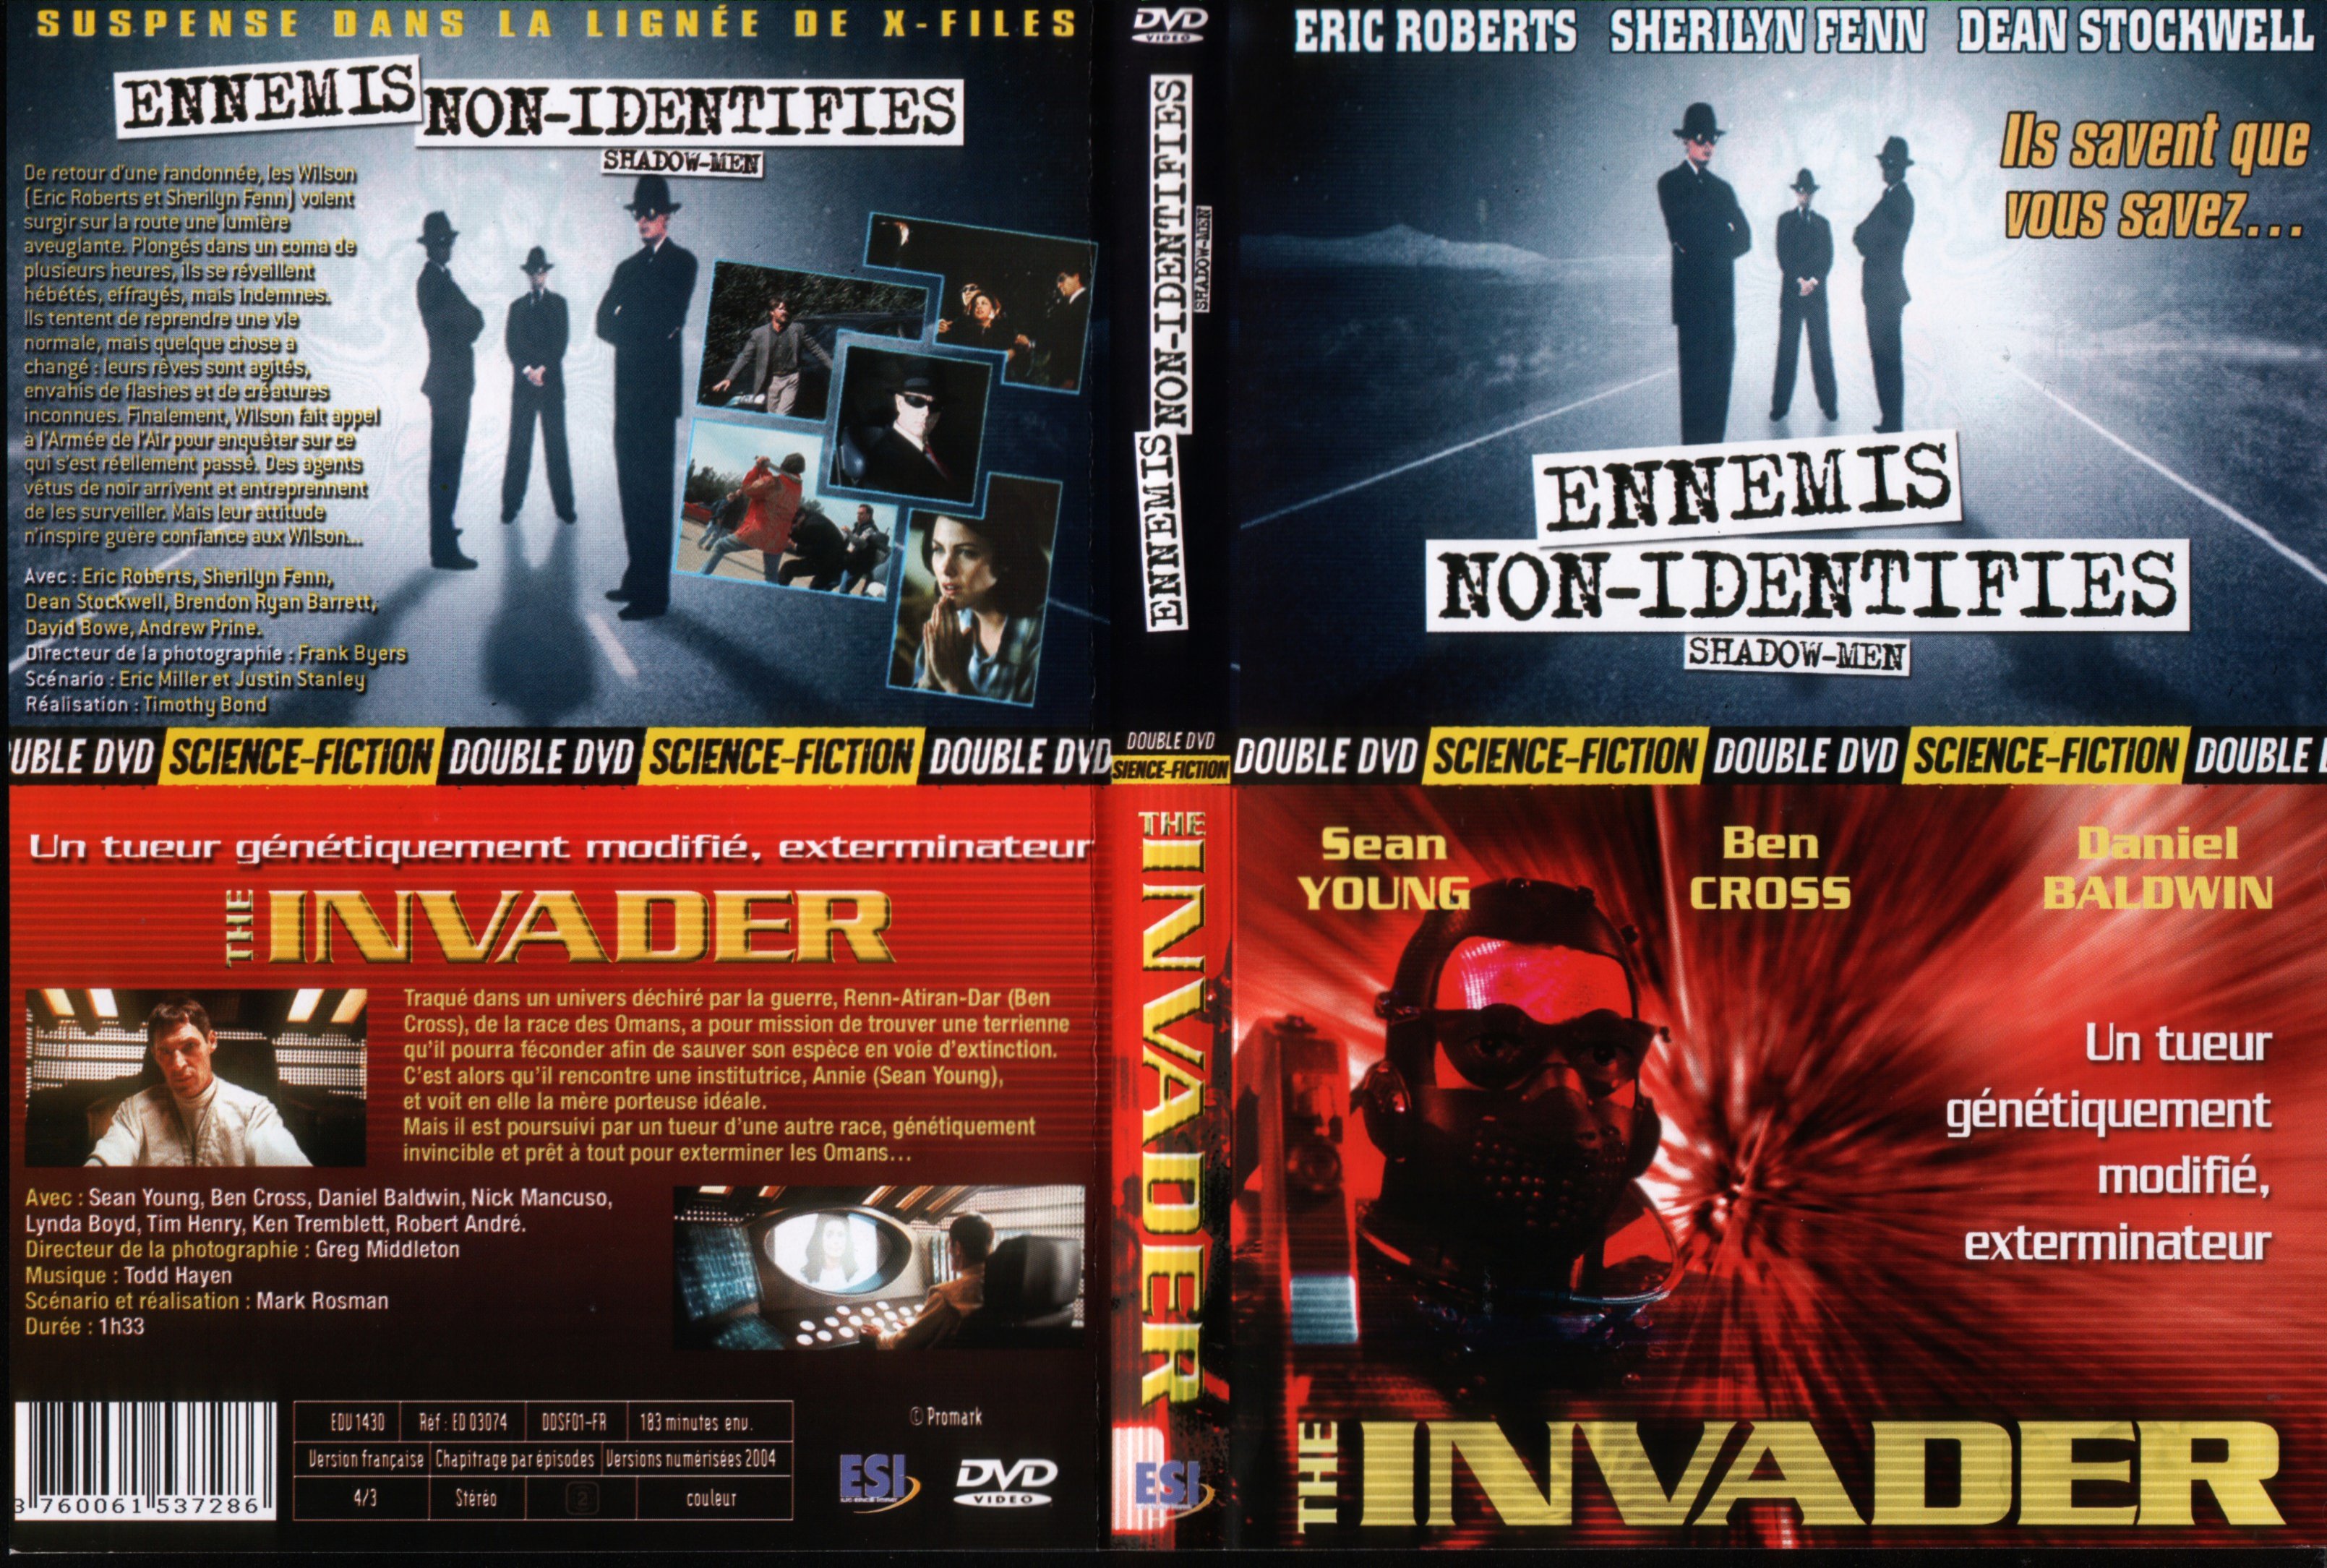 Jaquette DVD Ennemis non identifies + the invader